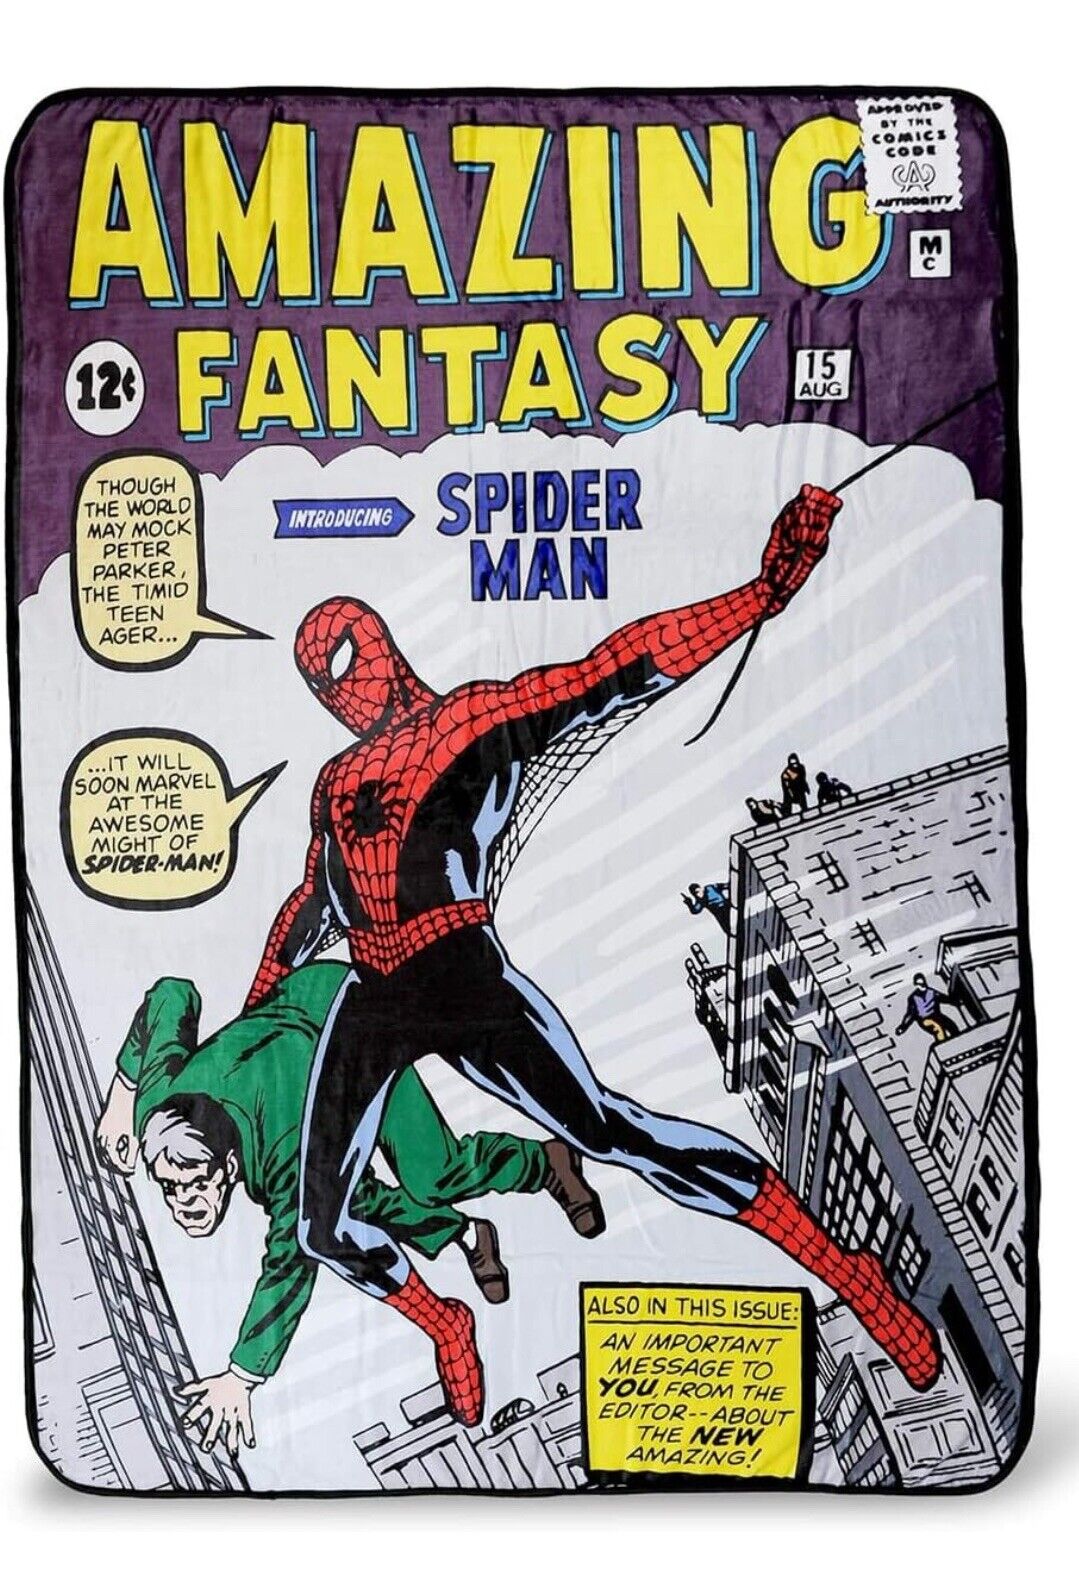 Amazing Fantasy 15 Spider-Man Marvel Comic BLANKET.